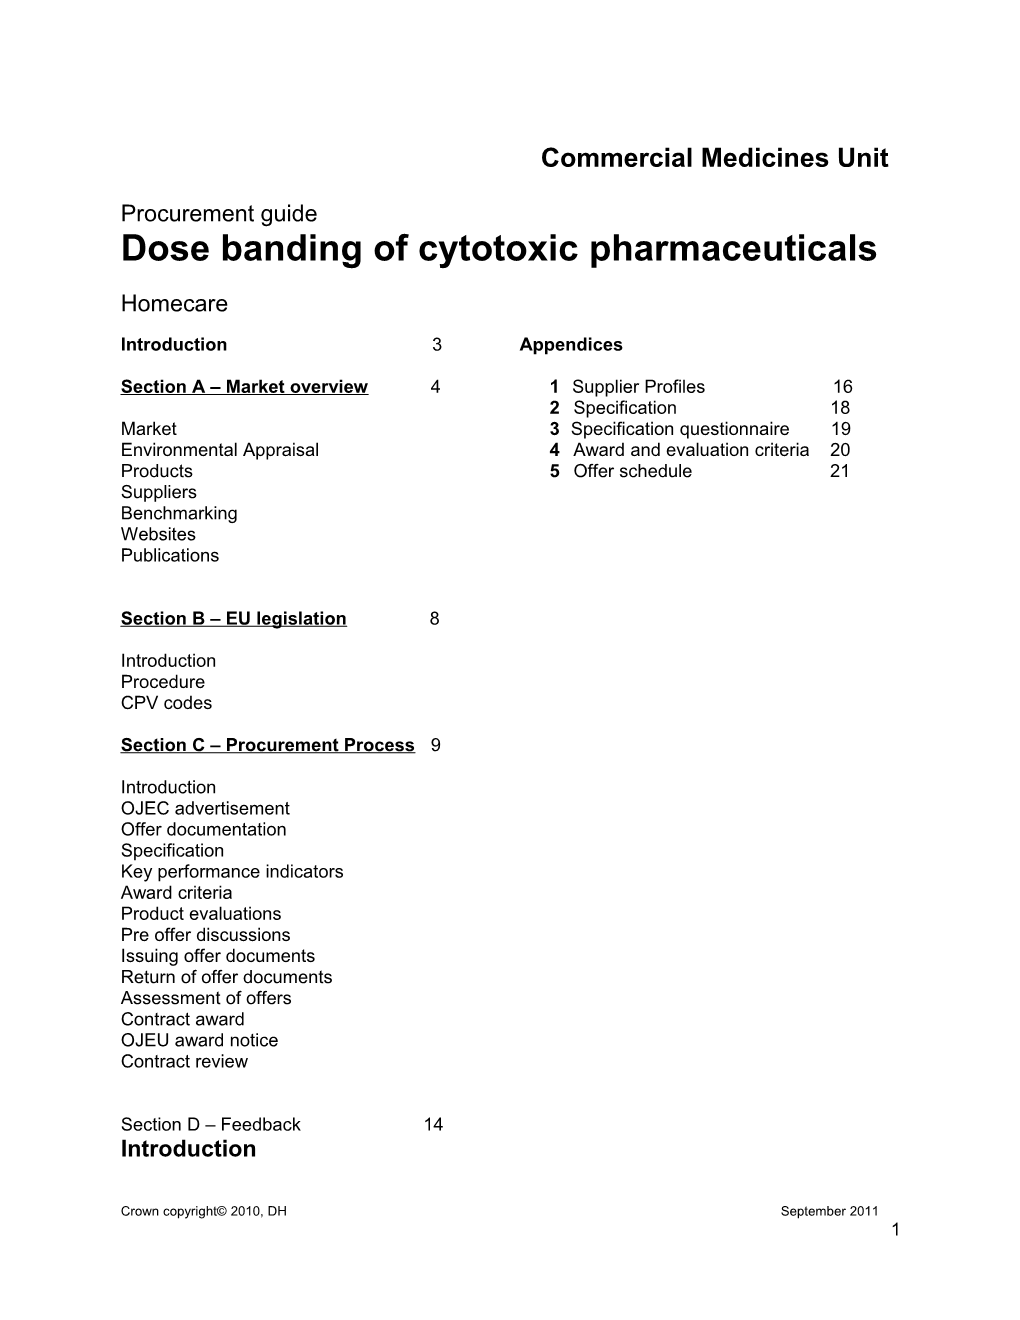 Dose Banding of Cytotoxic Pharmaceuticals